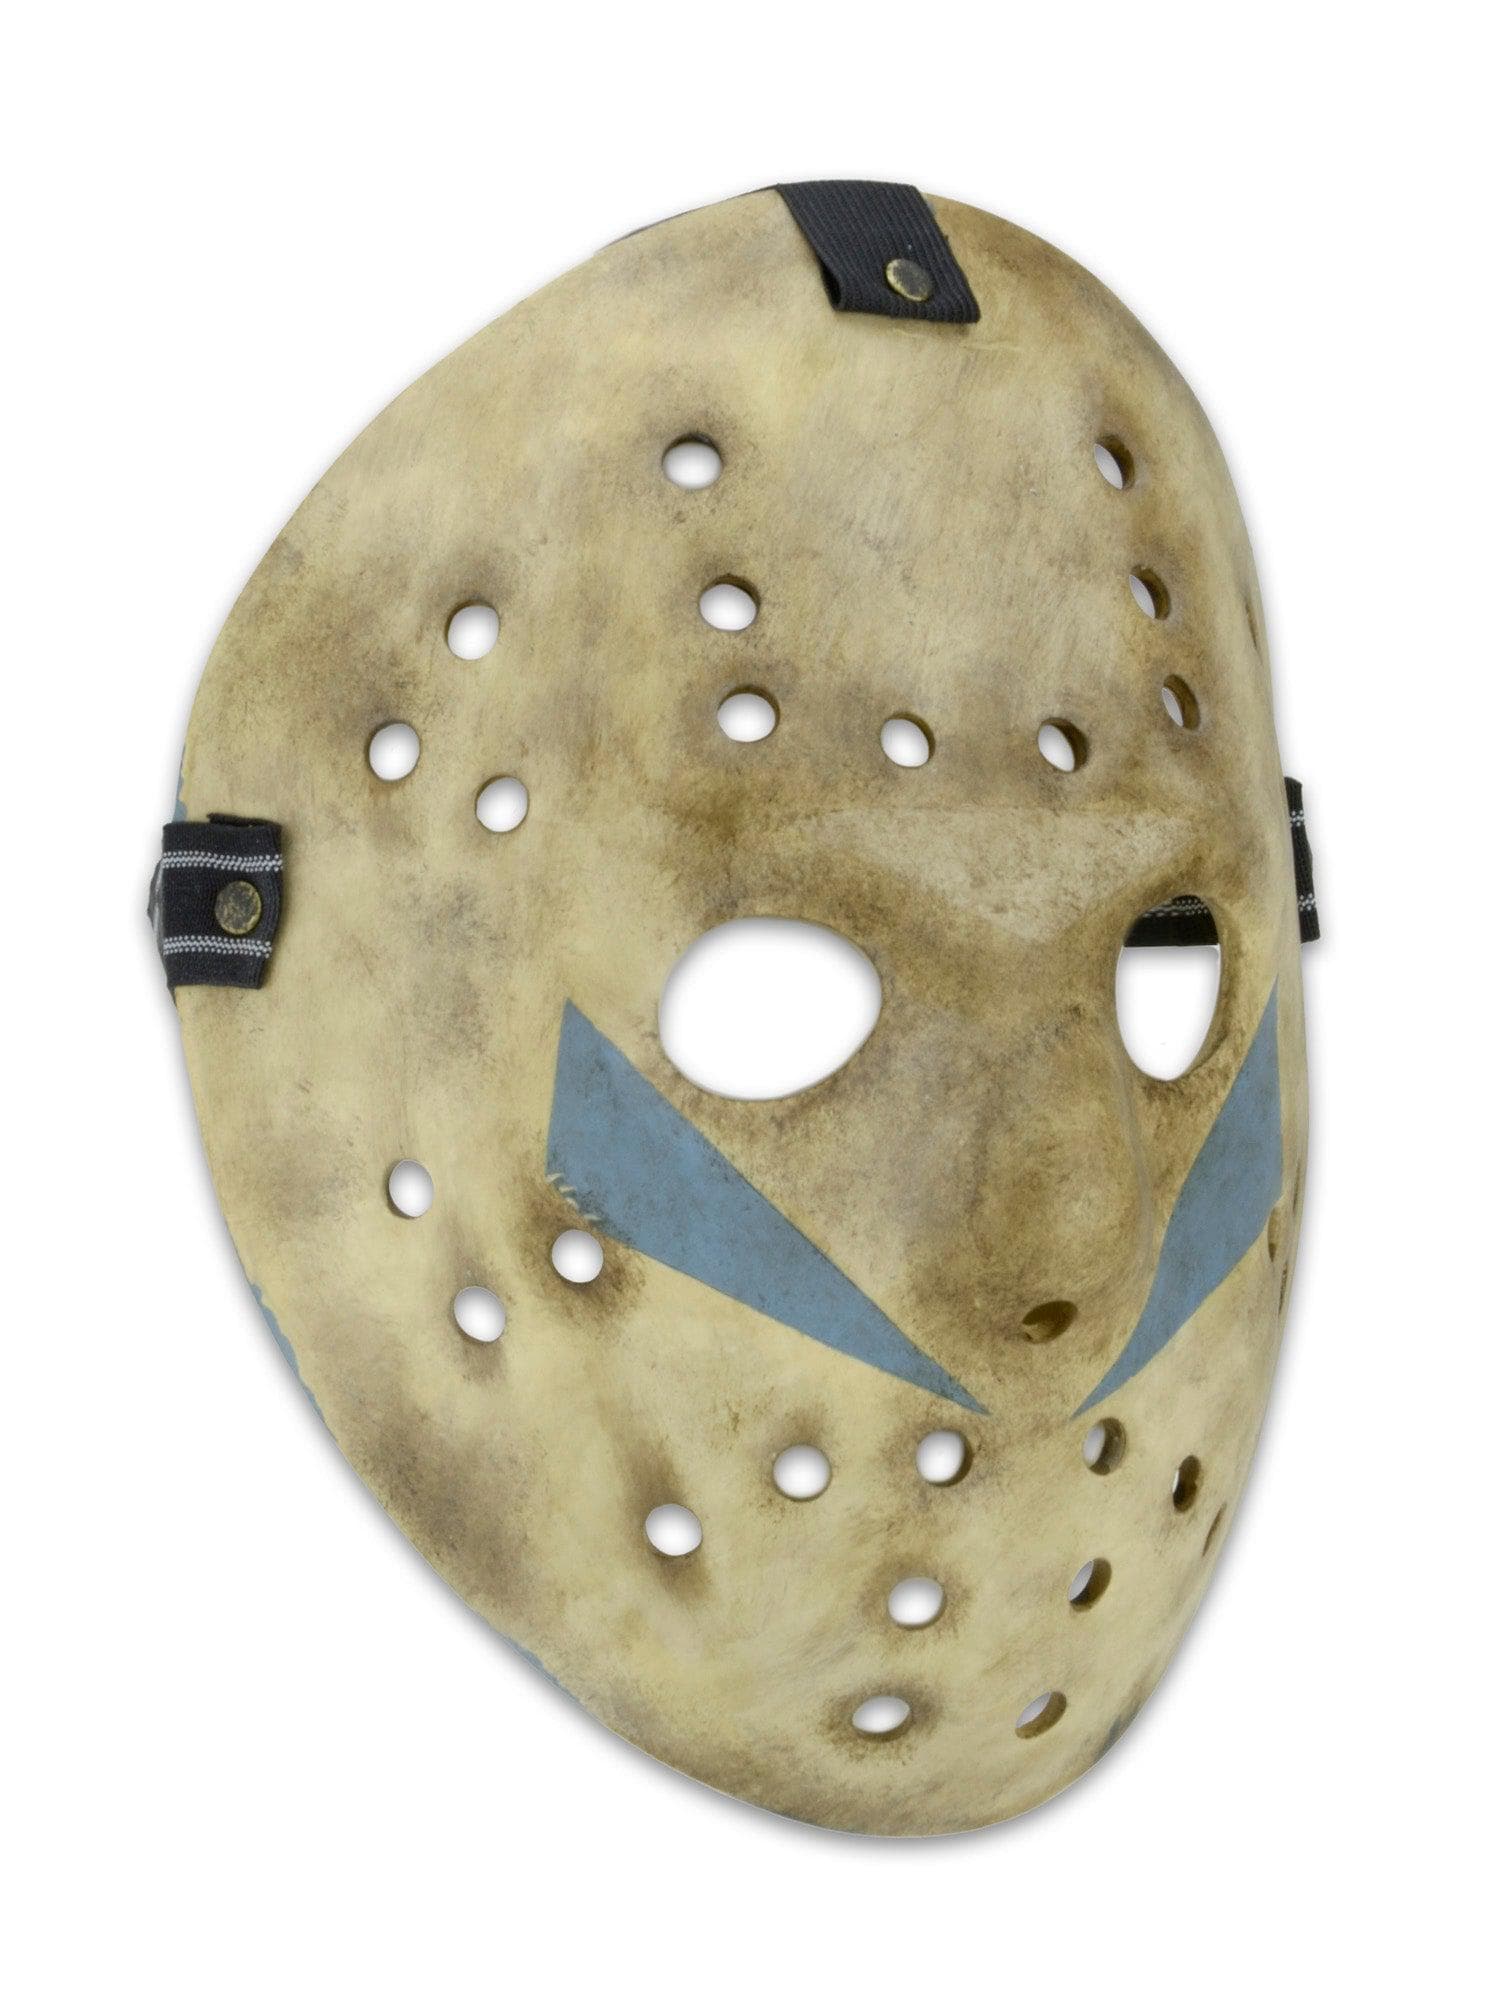 NECA - Friday the 13th - Prop Replica - Jason Mask Part 5 - costumes.com